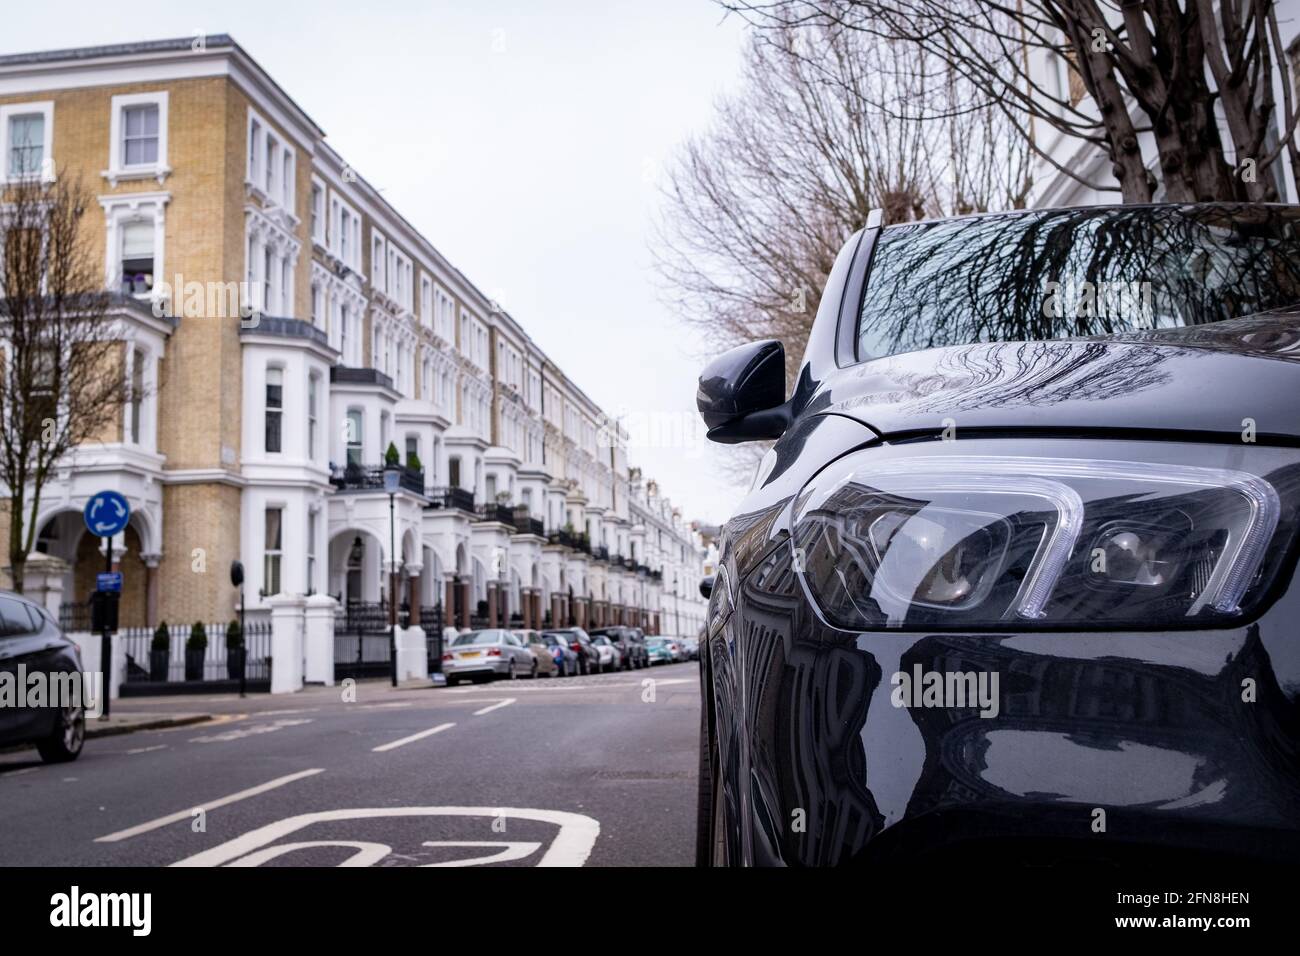 Car parked on British street of urban housing Stock Photo